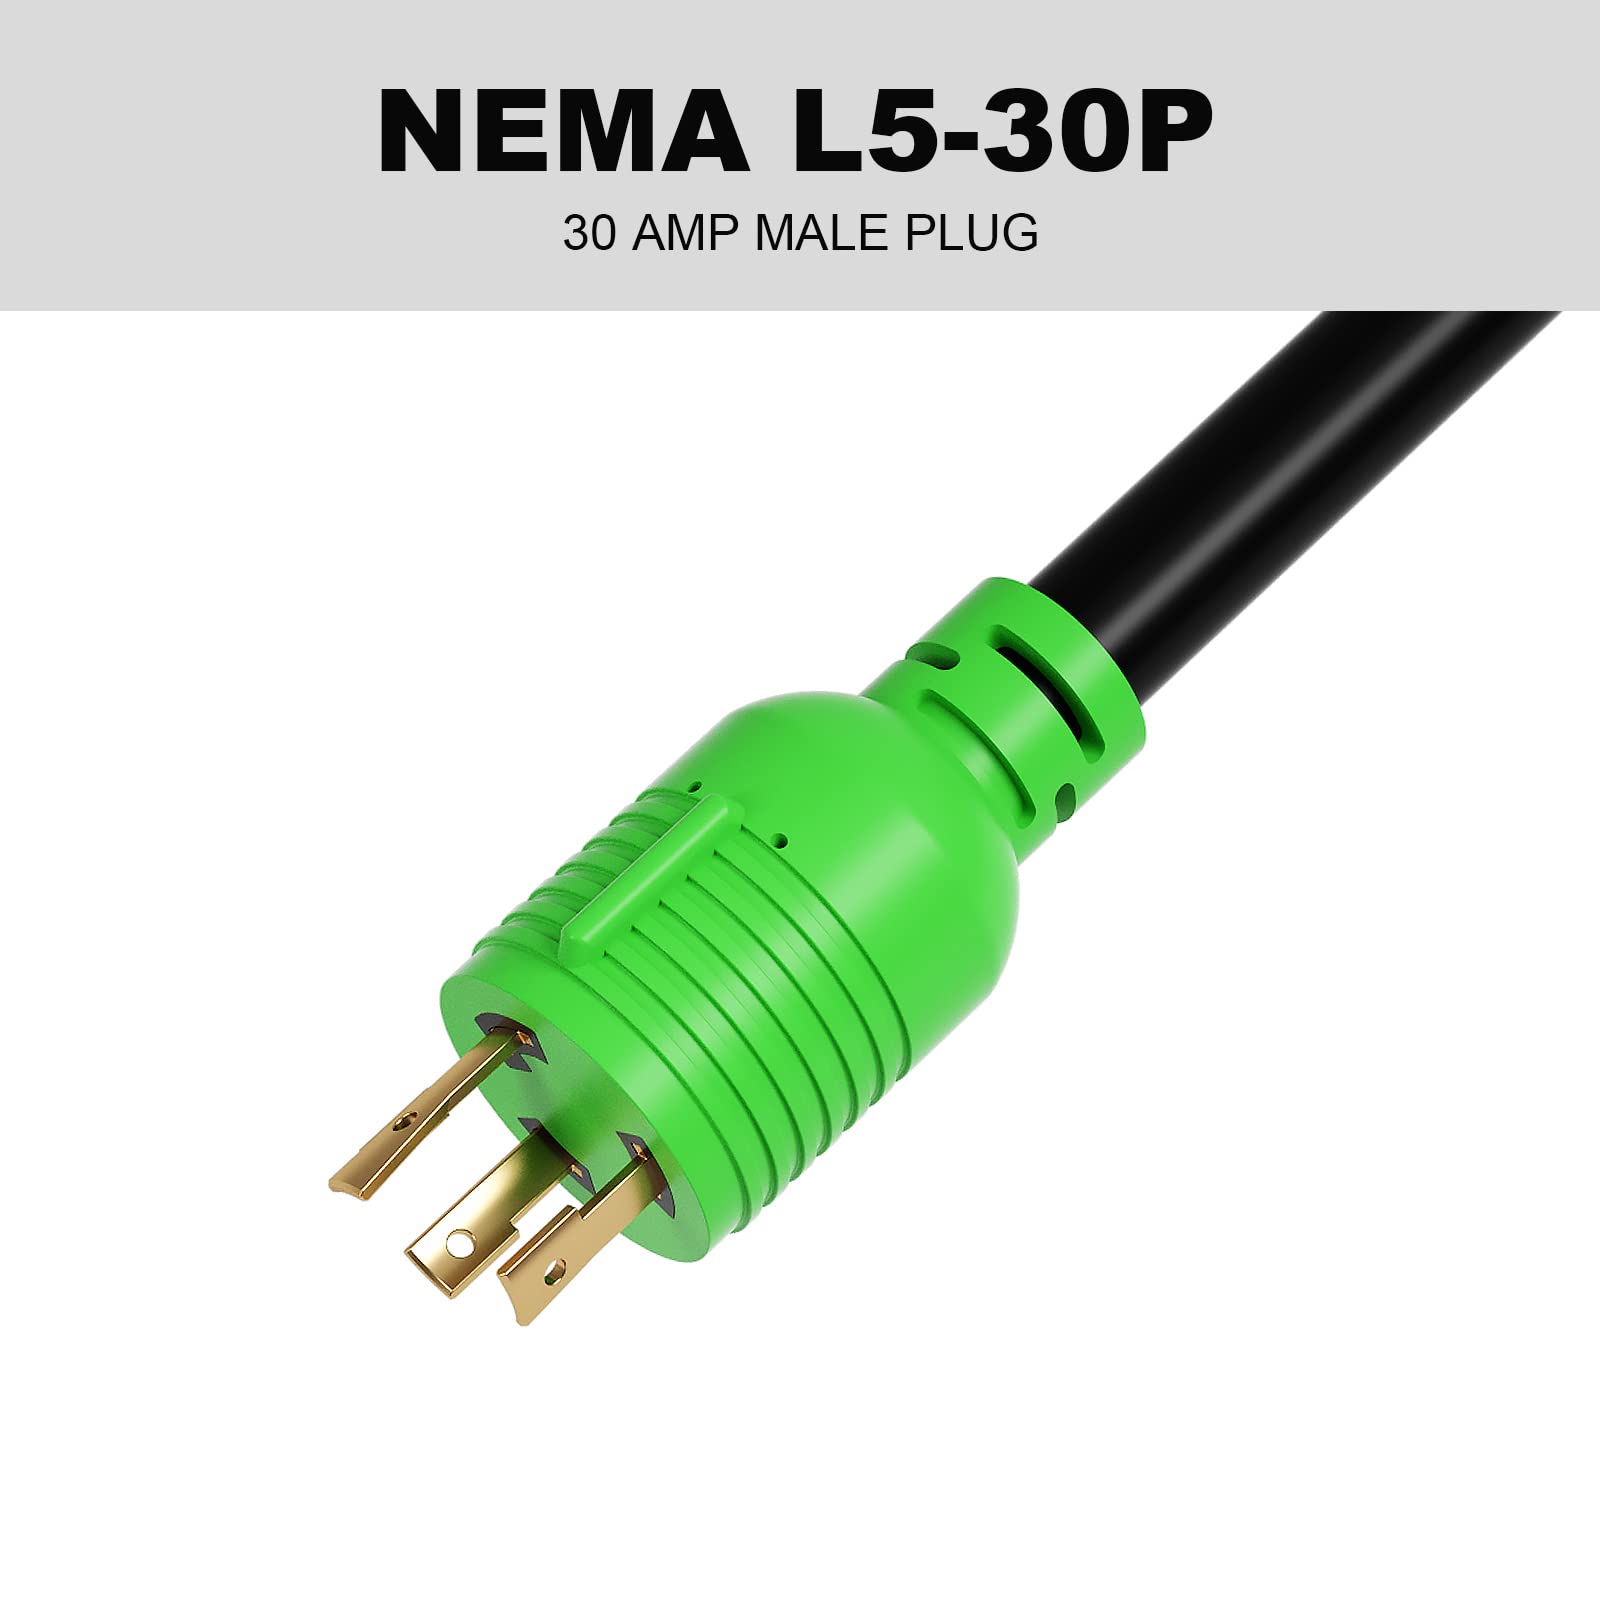 oviitech NEMA L5-30P to NEMA 14-50R RV Generator Adapter Power Cord, 250V, SJTW 10AWG*3C,30Amp Male to 50Amp Female Generator Conversion Adapter, Outdoor RV Camping, 1.5Ft, Green